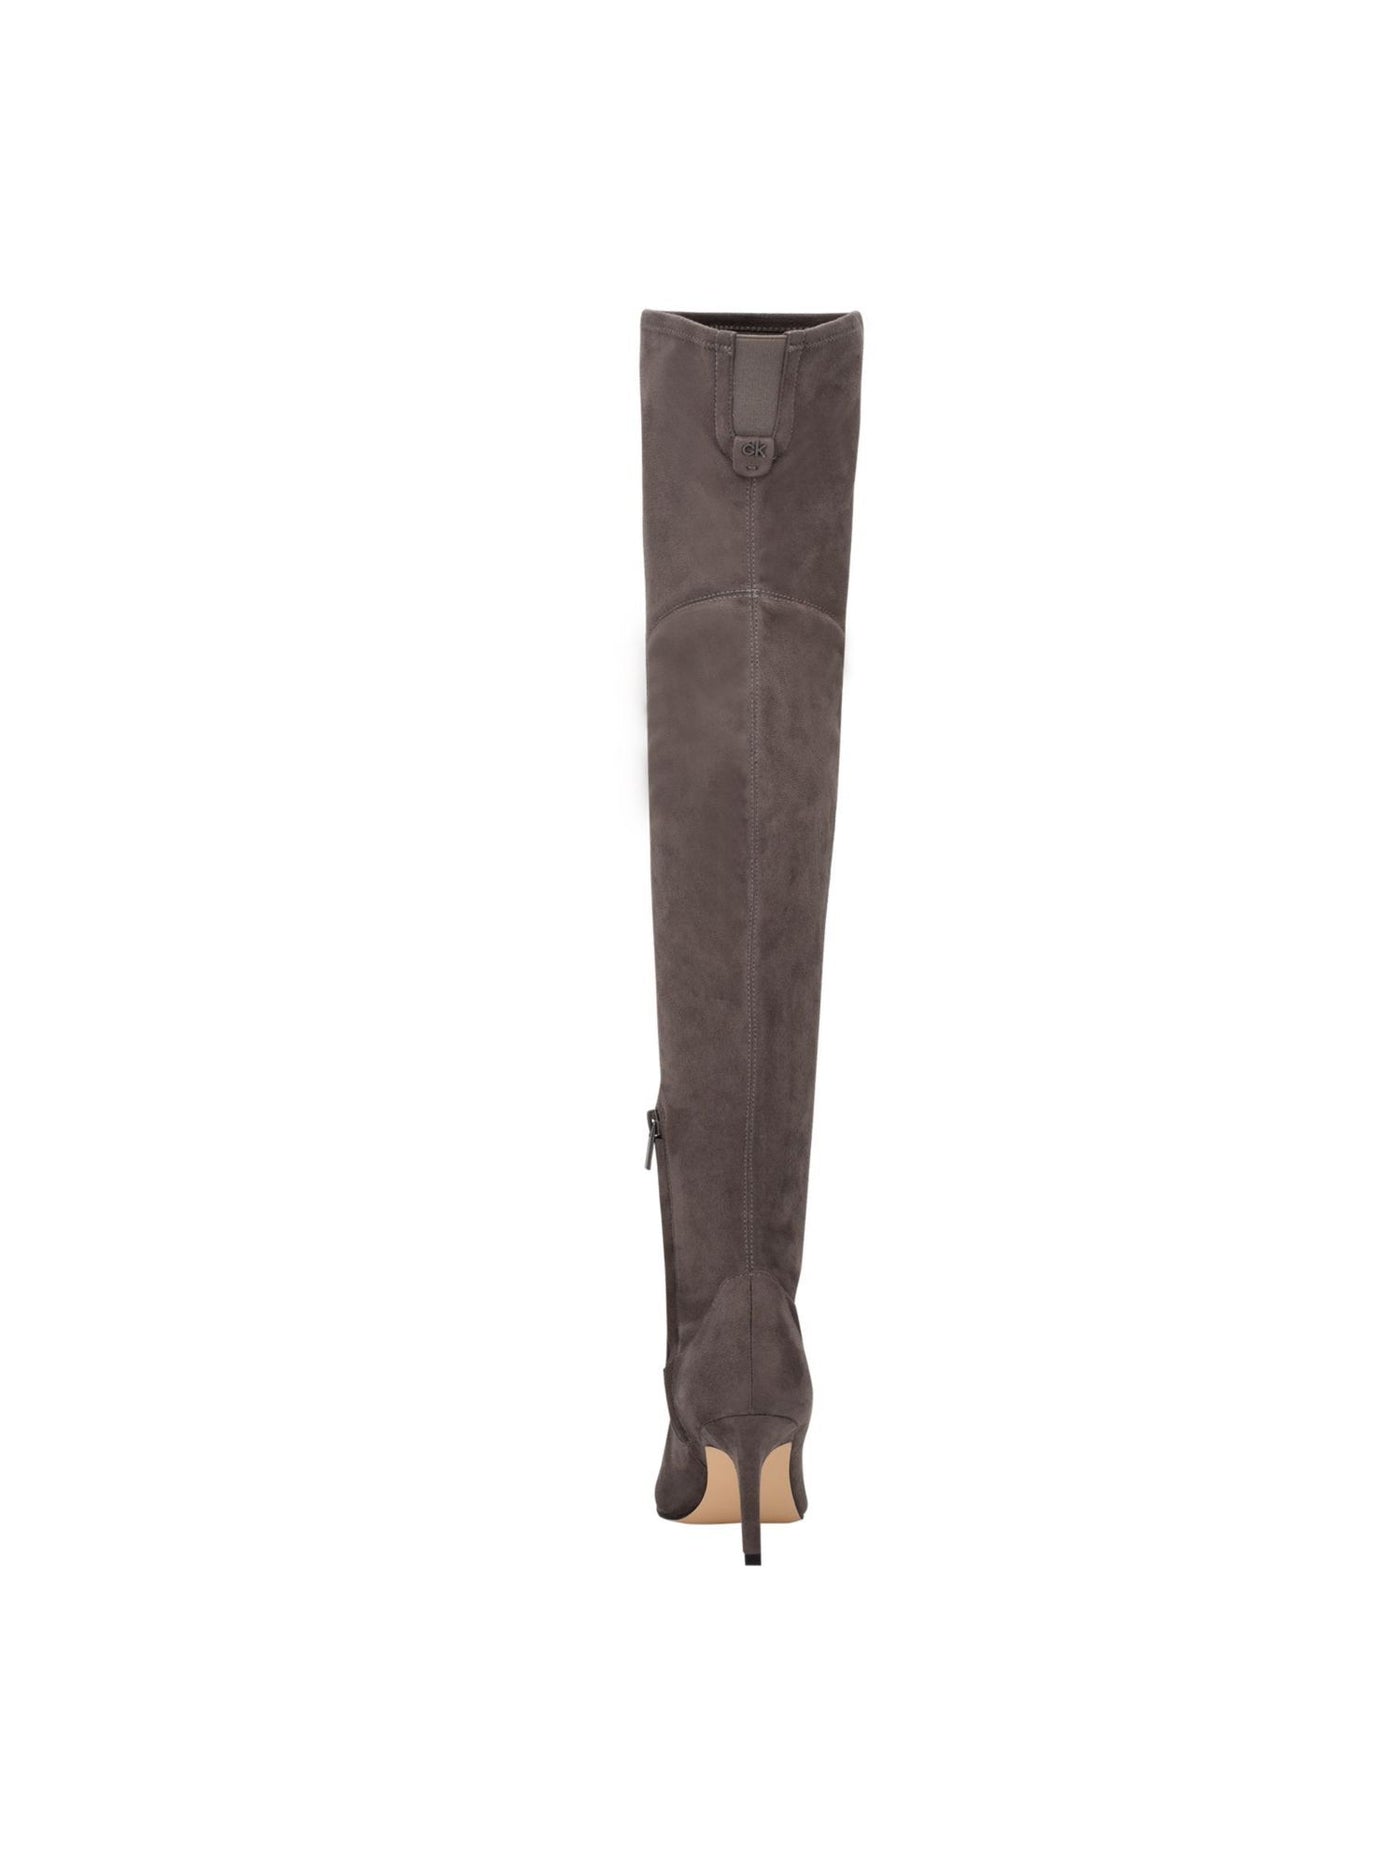 CALVIN KLEIN Womens Gray Goring Sacha Pointy Toe Stiletto Zip-Up Heeled Boots 9 M